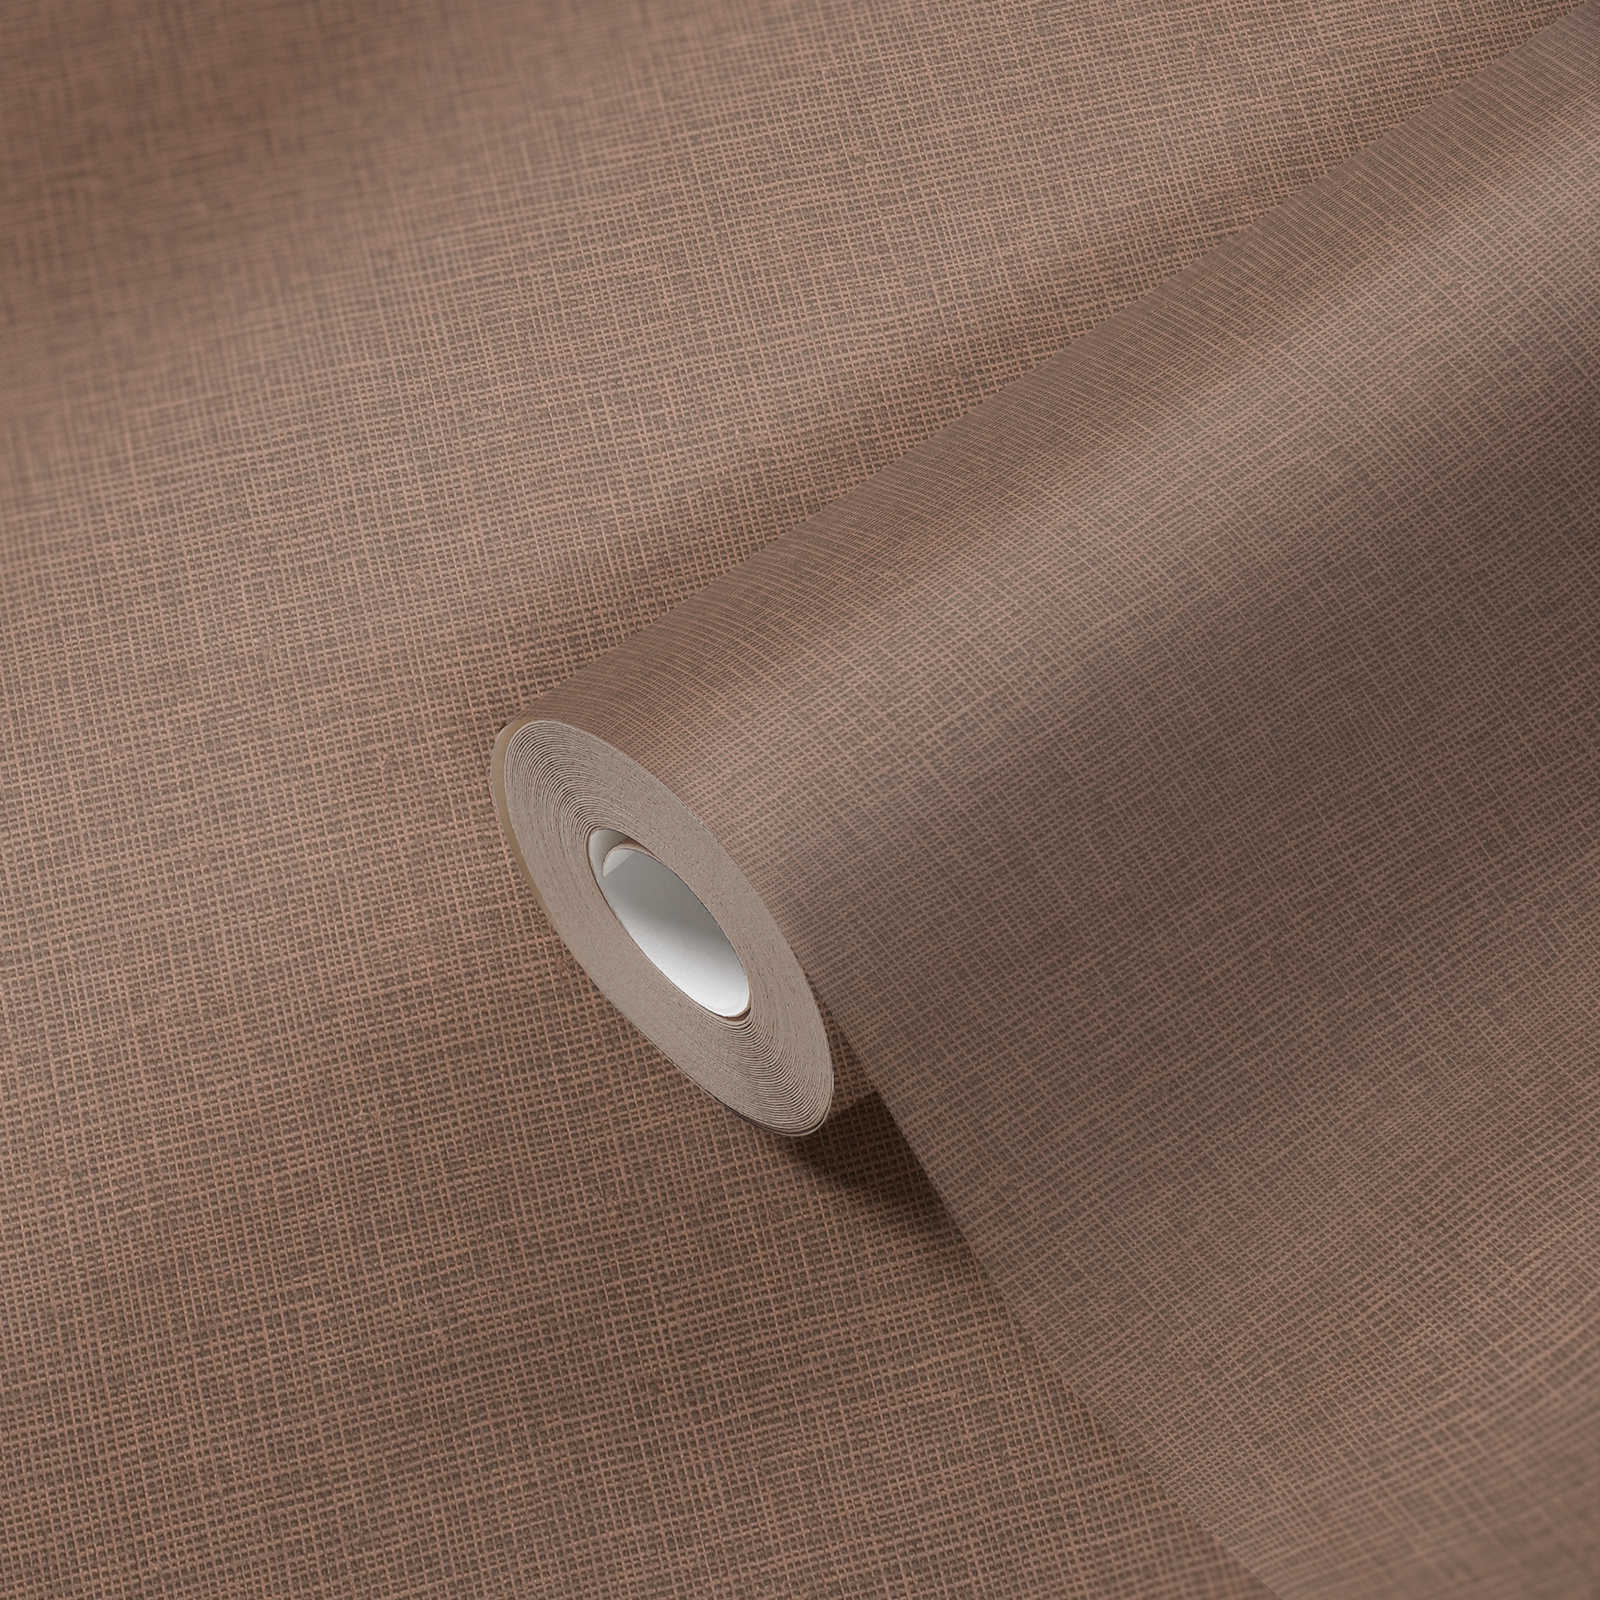             Non-woven wallpaper plain with linen texture - brown
        